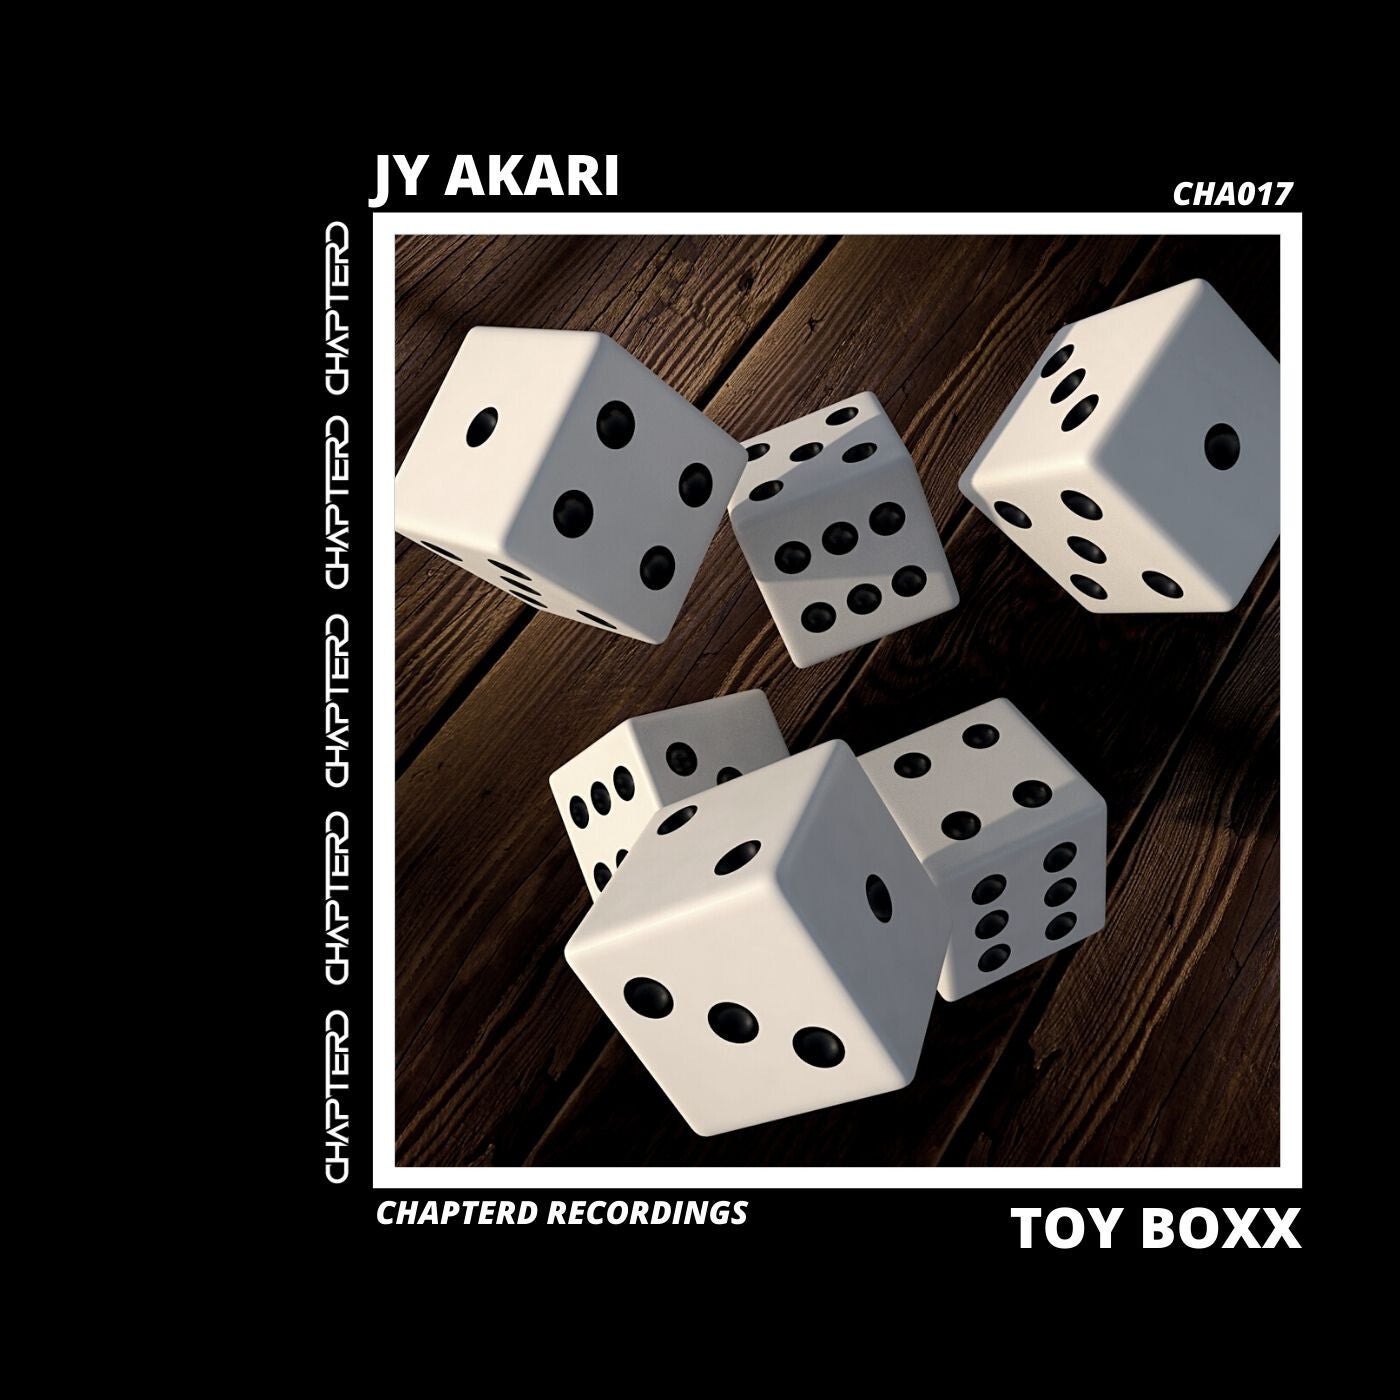 Toy Boxx